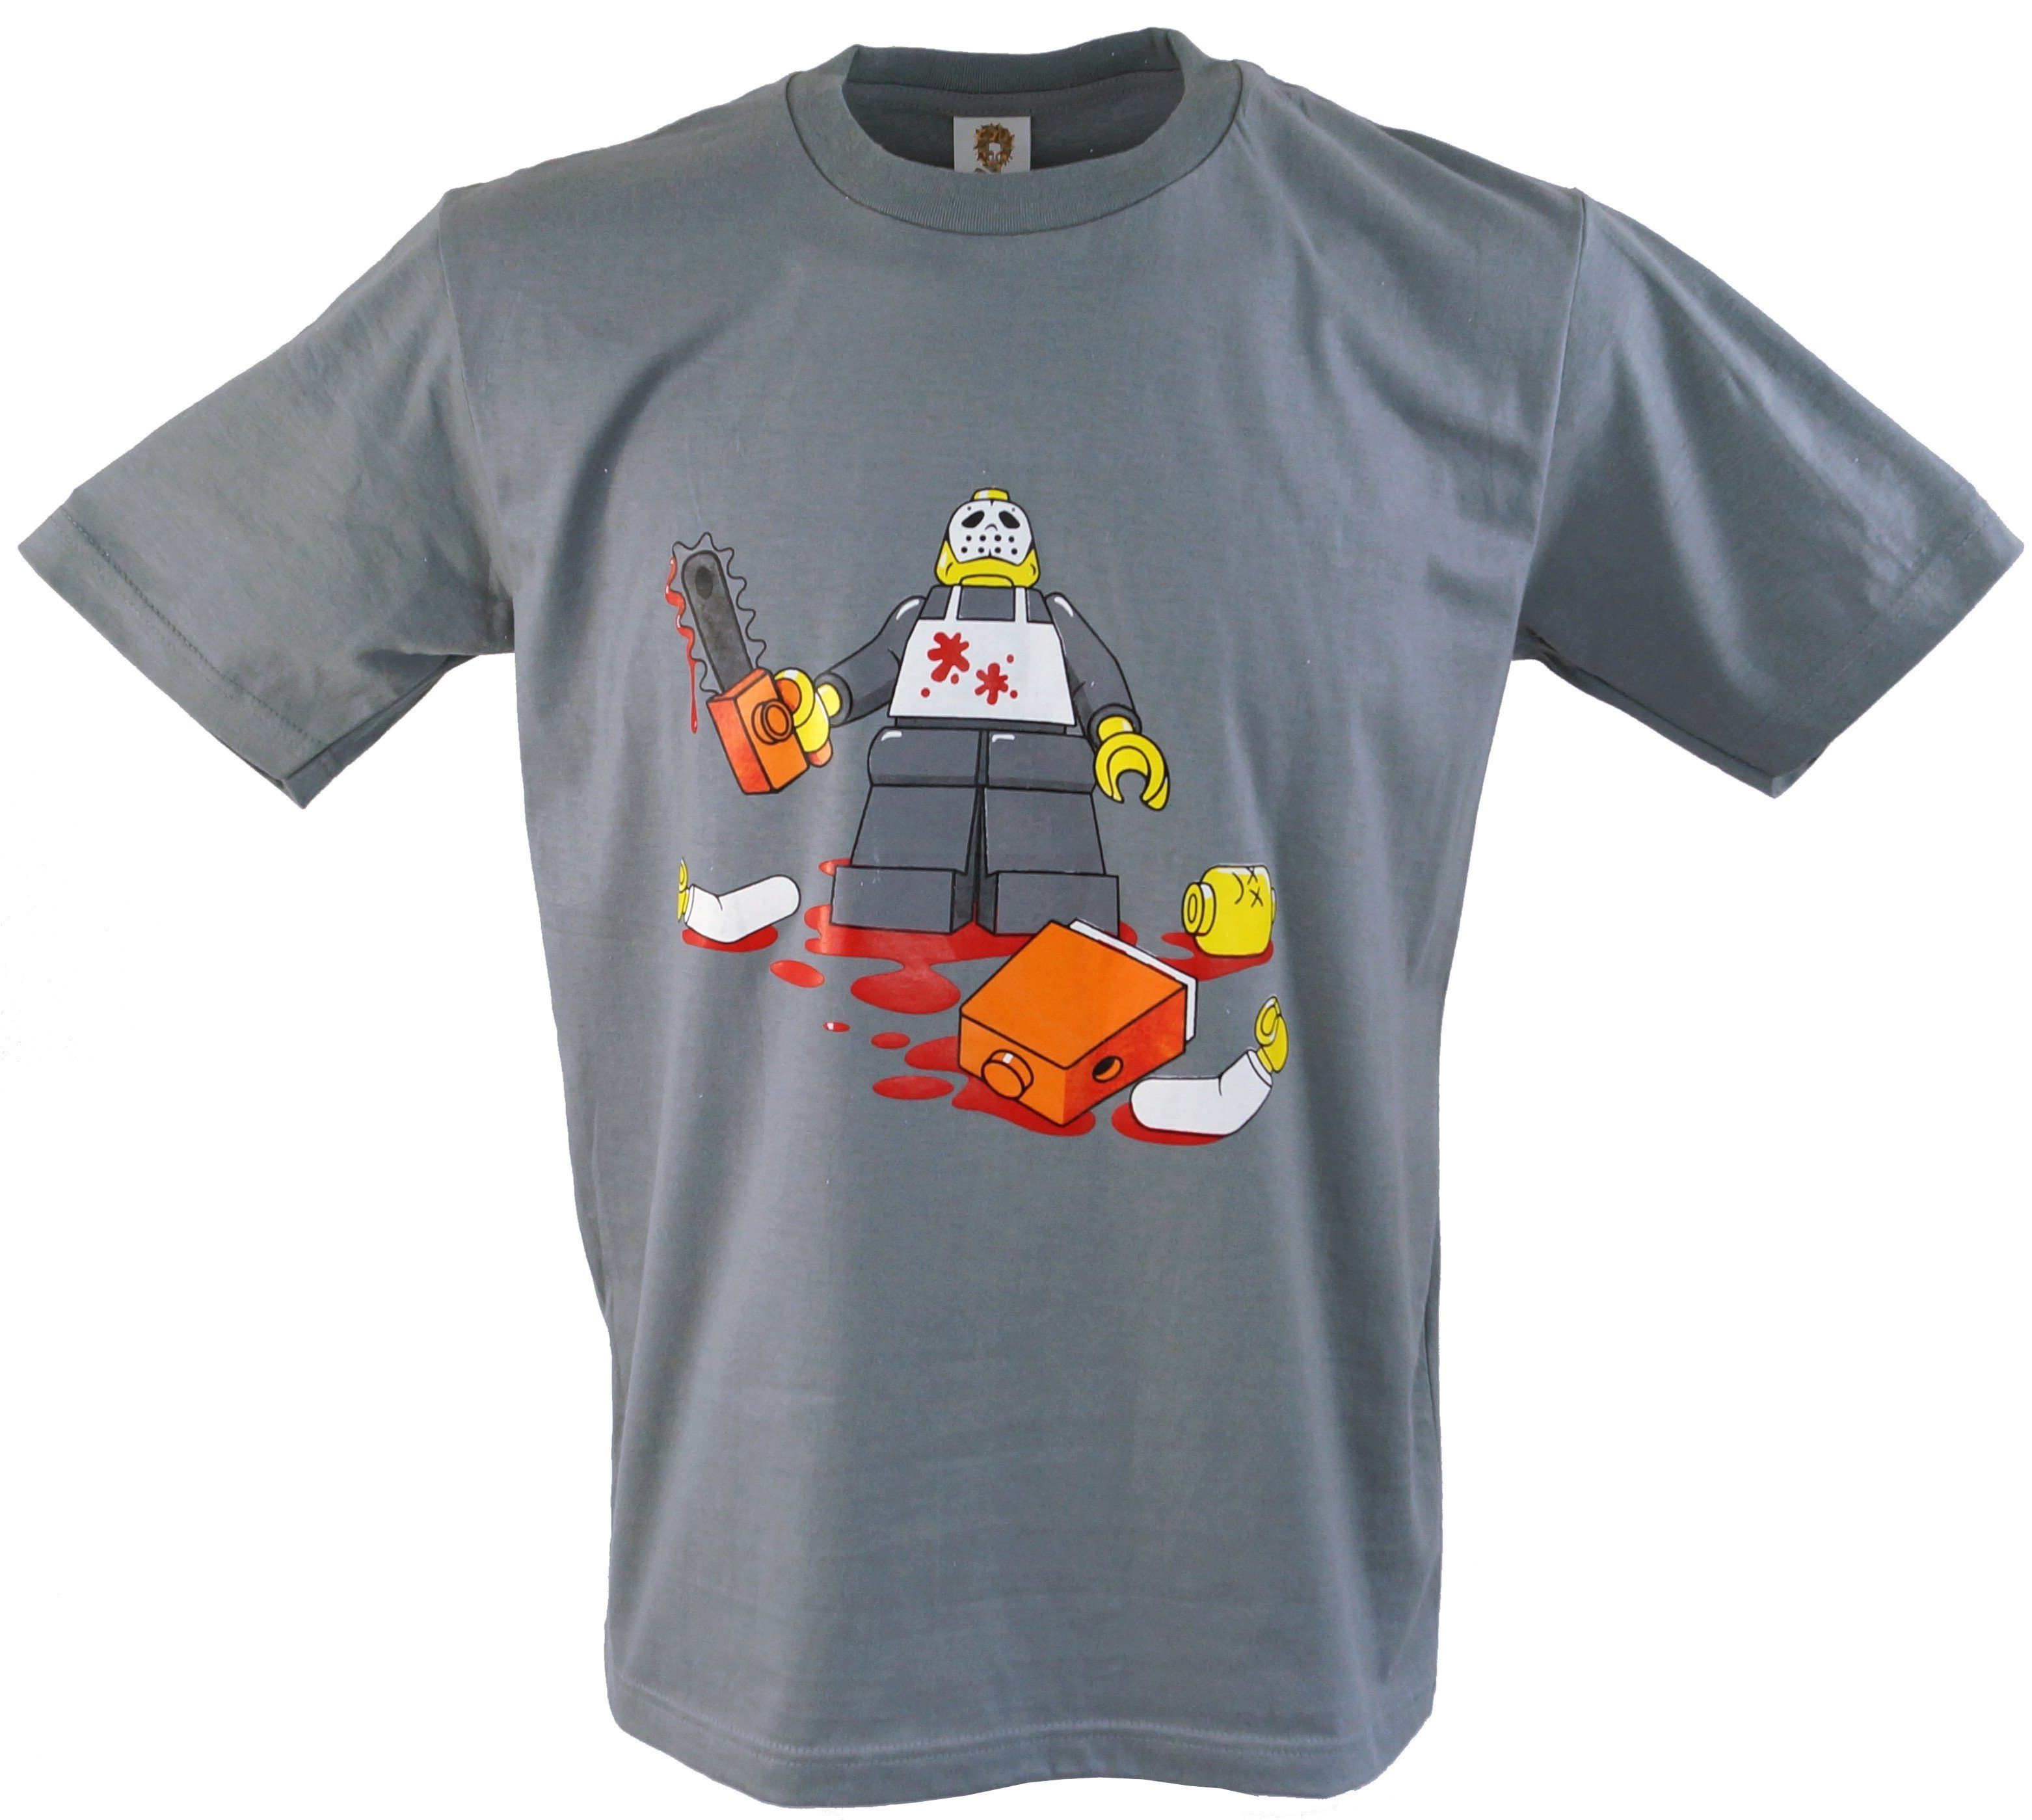 Guru-Shop T-Shirt Fun Retro Art T-Shirt - Robo Killer alternative Bekleidung